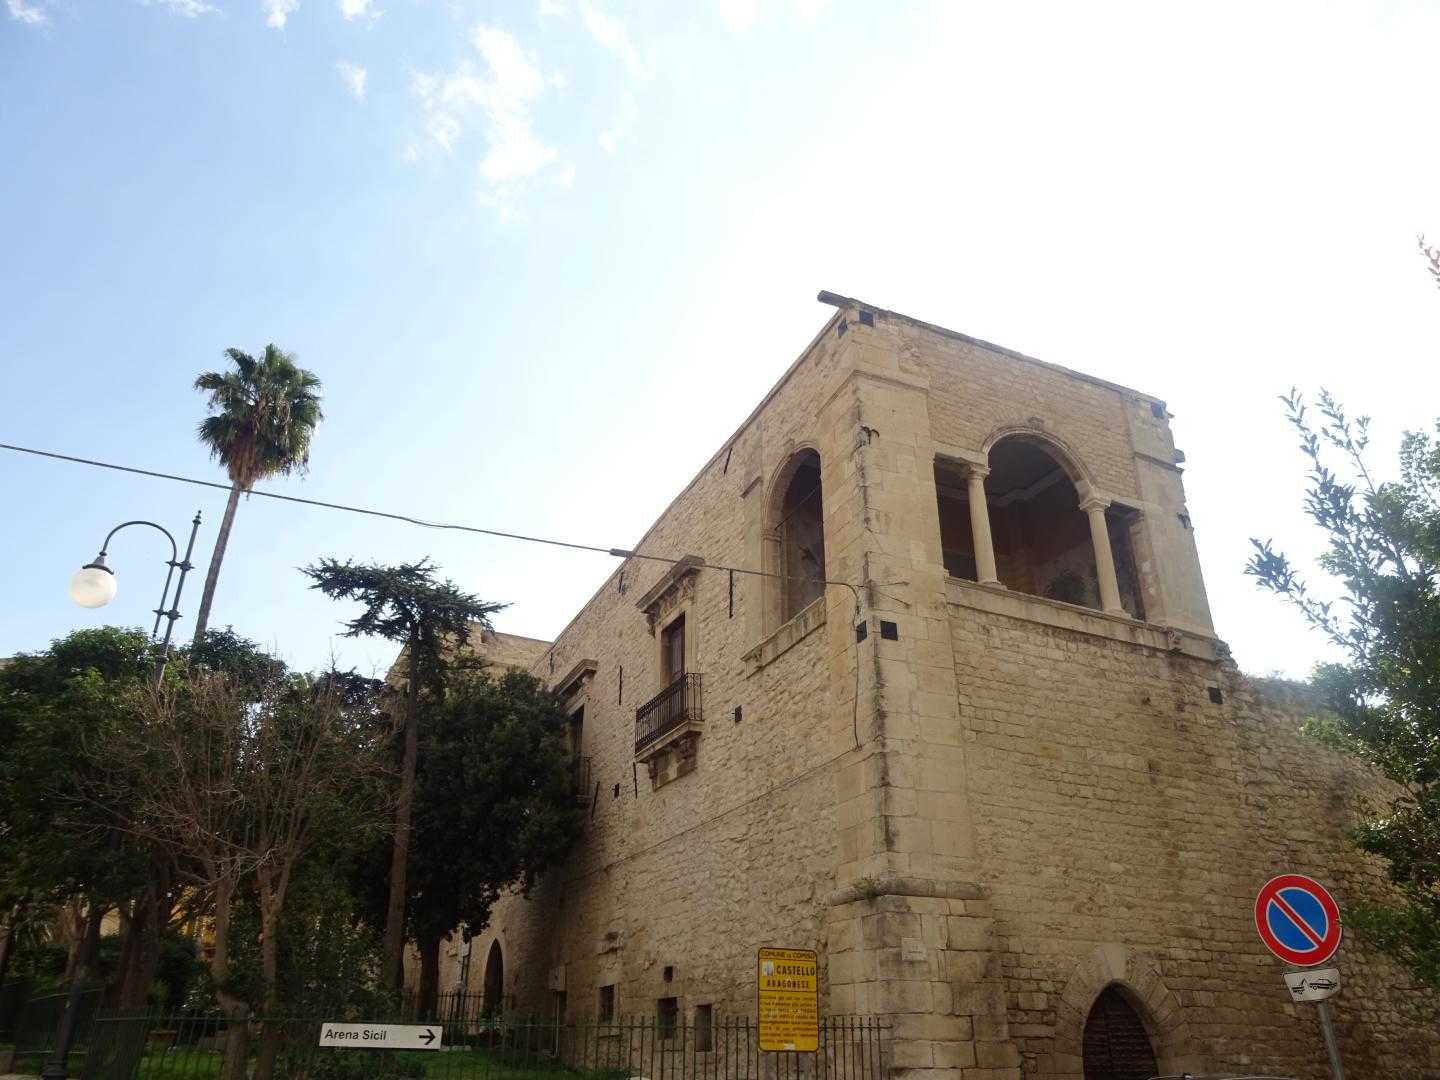 Aragonese Castle of Comiso